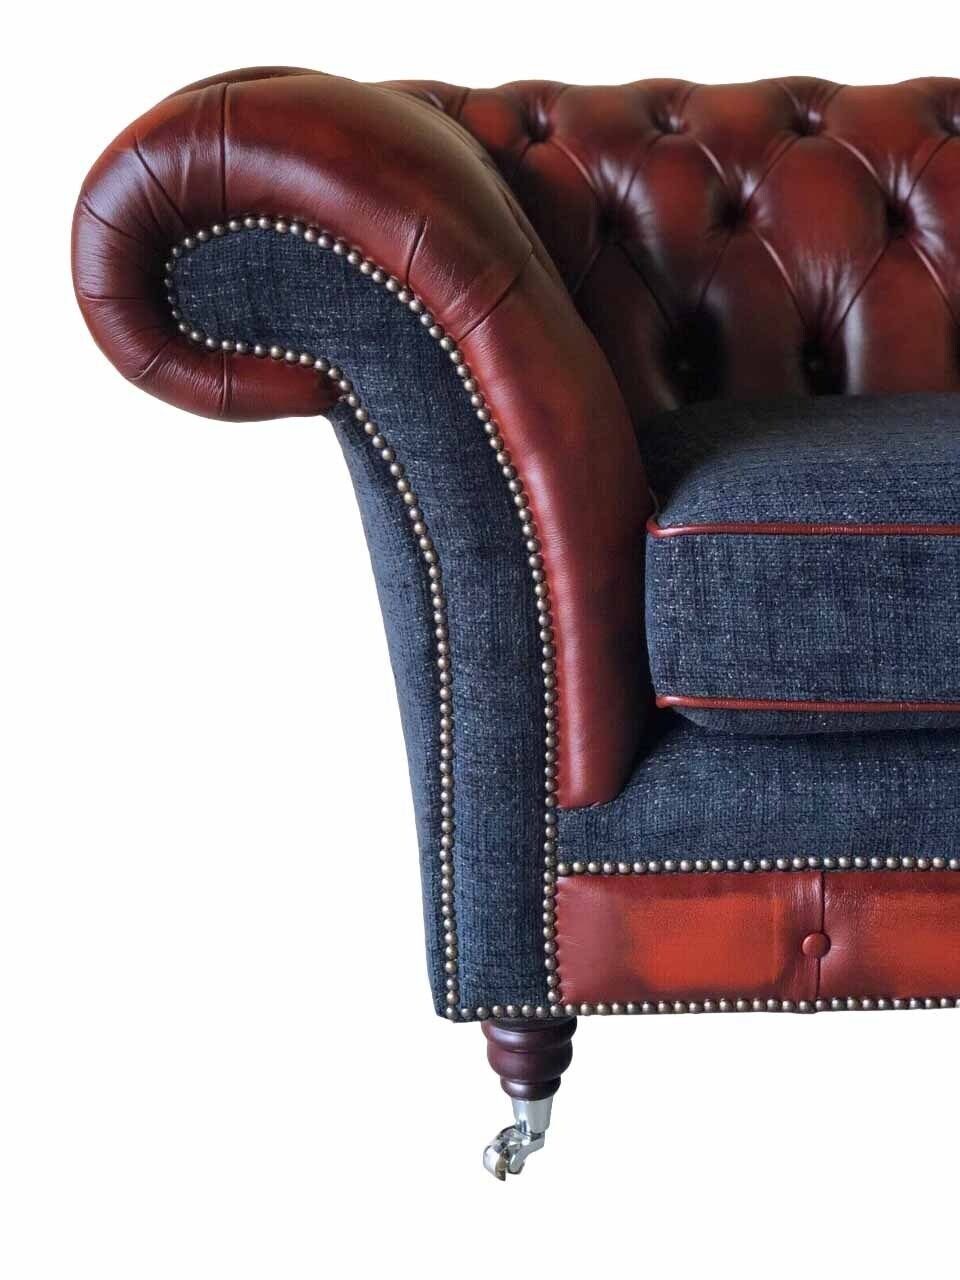 Leder Sitzer Made Braun JVmoebel Polster Neu, Europe in Couch Design Textil Sofa 3 Sofa Chesterfield